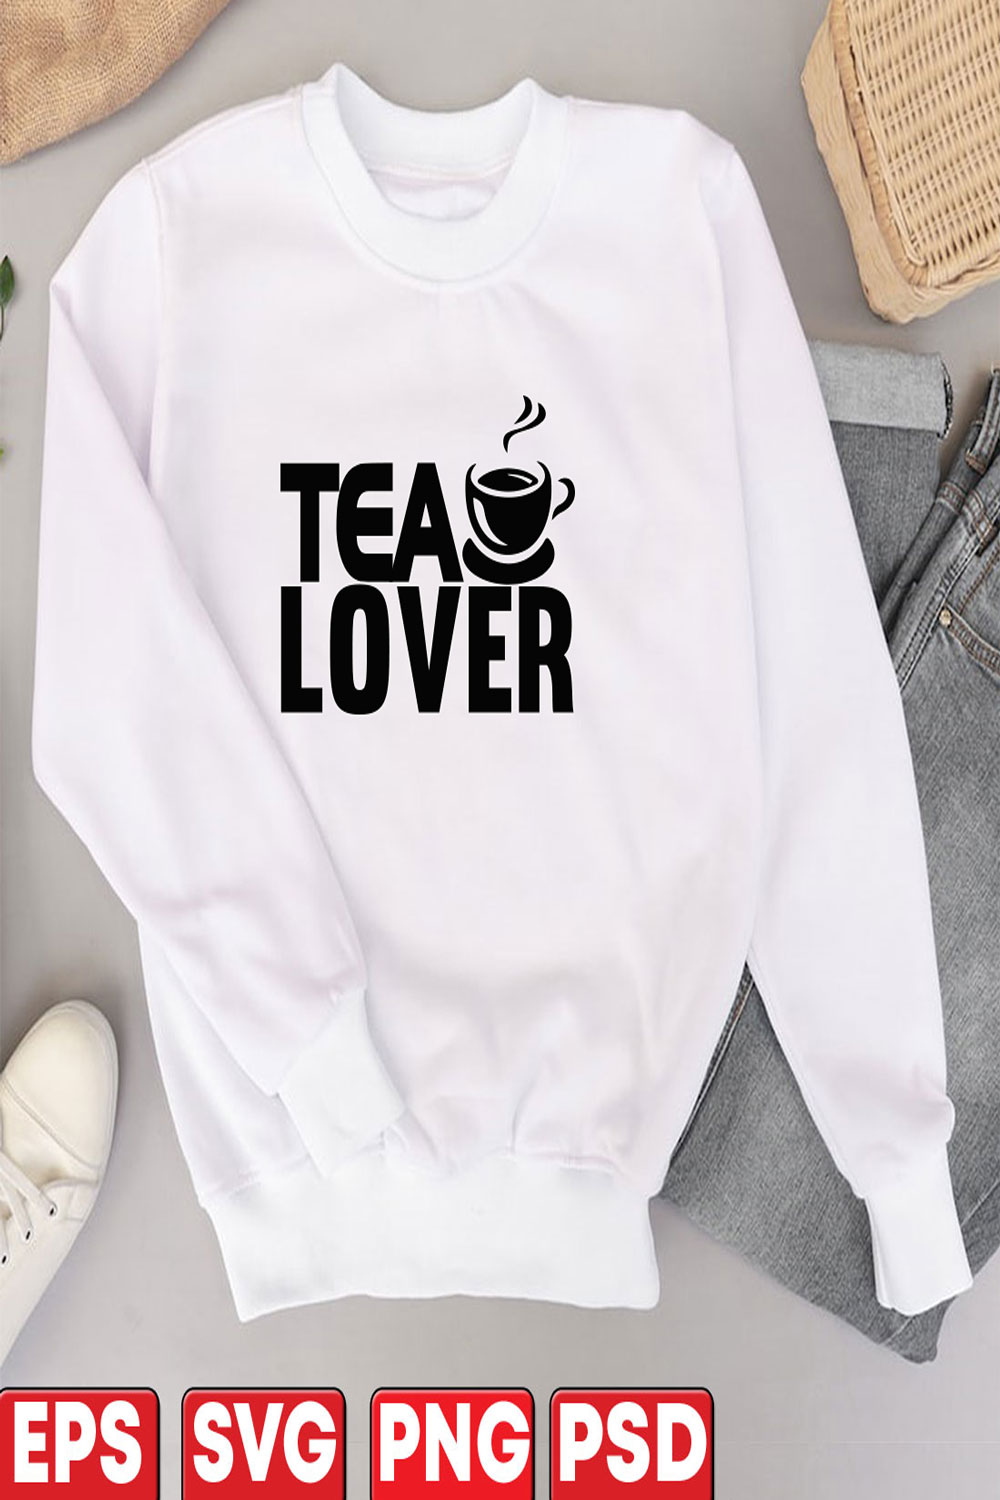 Tea Lover pinterest preview image.